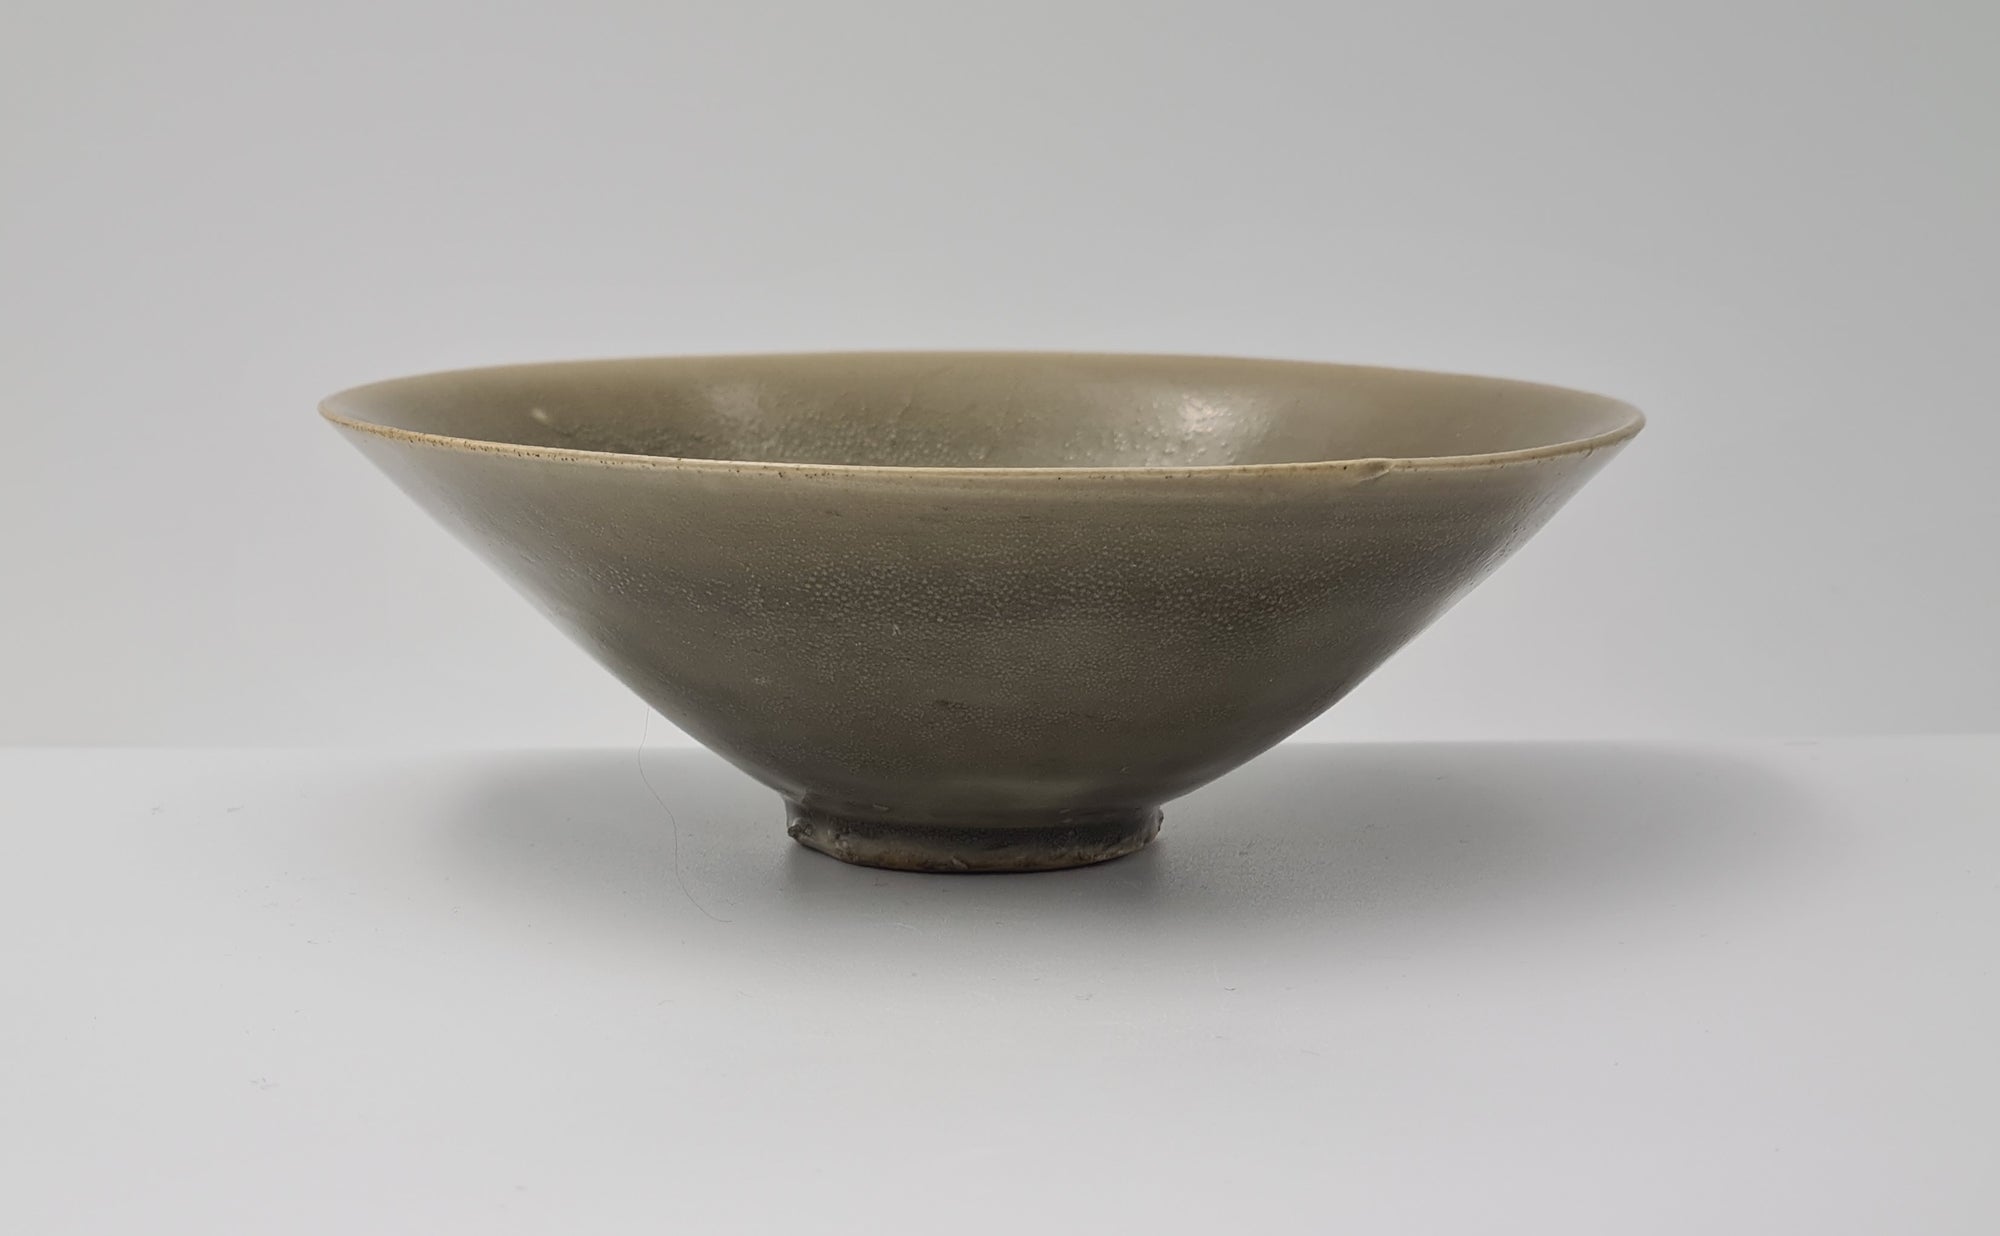 Yaozhou bowl Northern Song